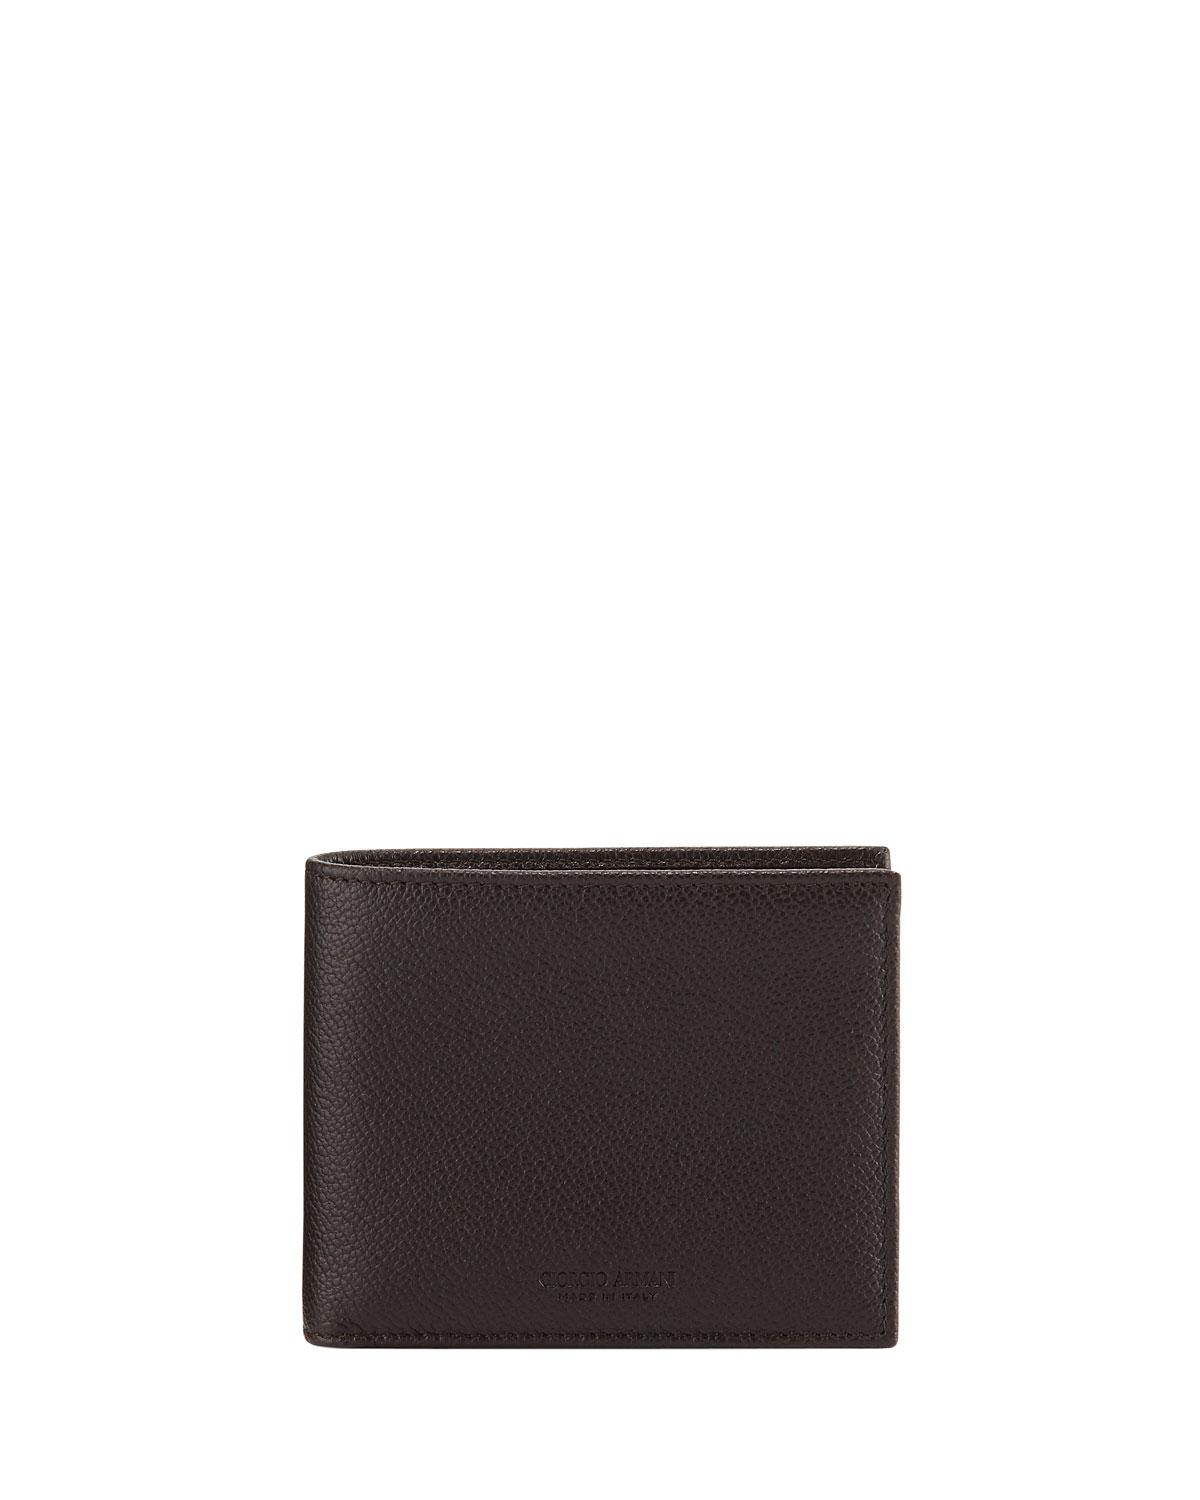 Giorgio Armani Men's Tumbled Leather Bi-fold Wallet in Brown for Men - Lyst